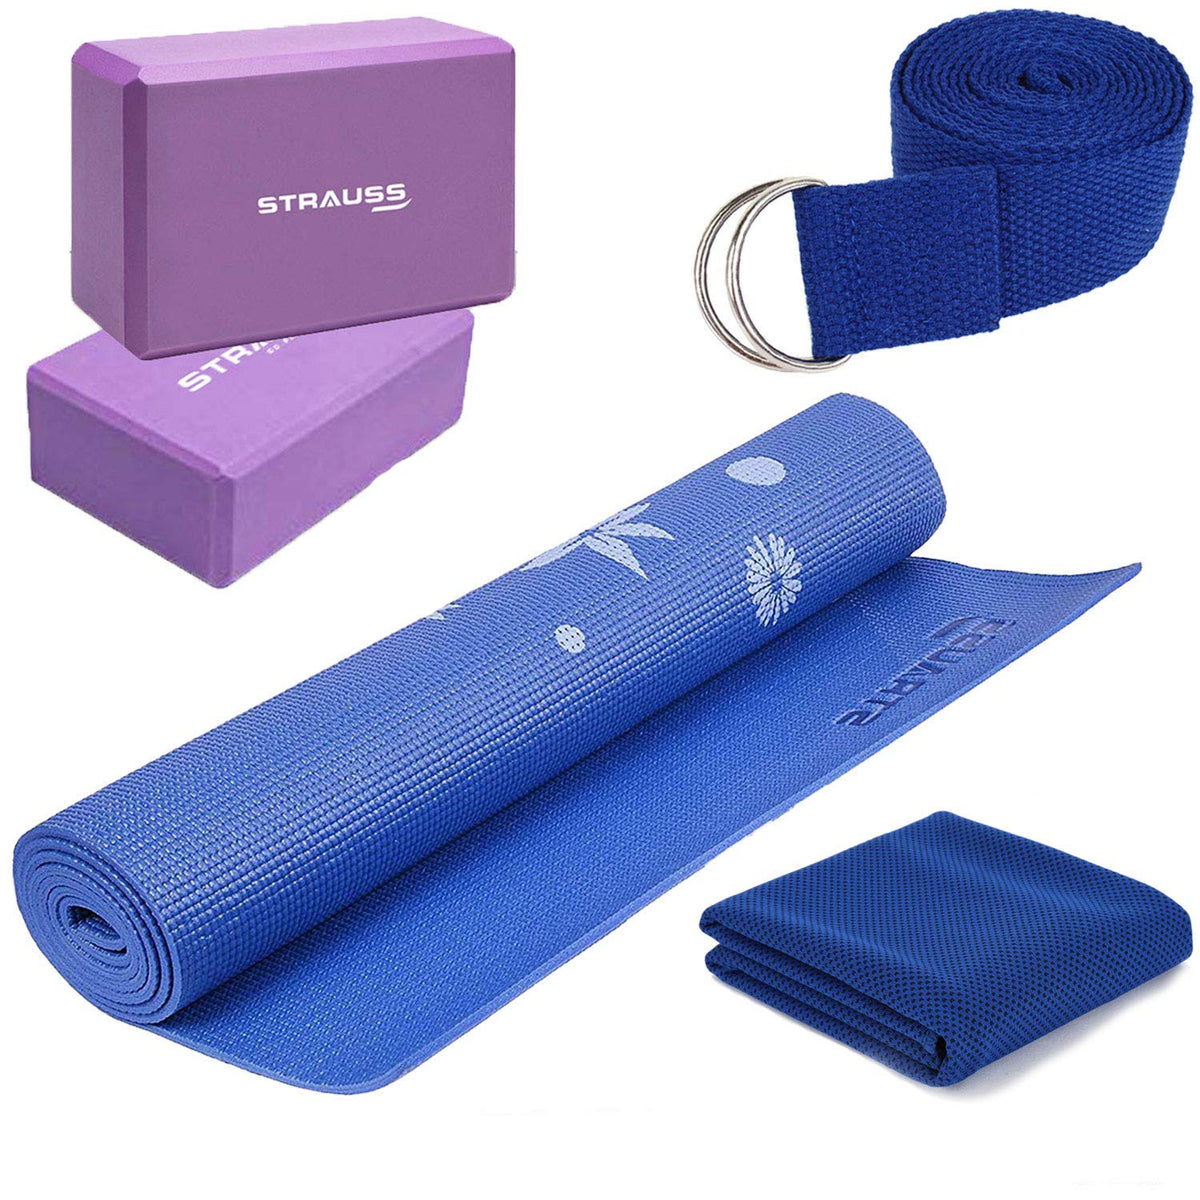 Strauss Yoga Mat 6MM,(Floral Blue), Yoga Block (Purple), Pair, Anti-Microbial Sports Cooling Towel(Blue) and Yoga Belt, 8 Feet, (Blue)